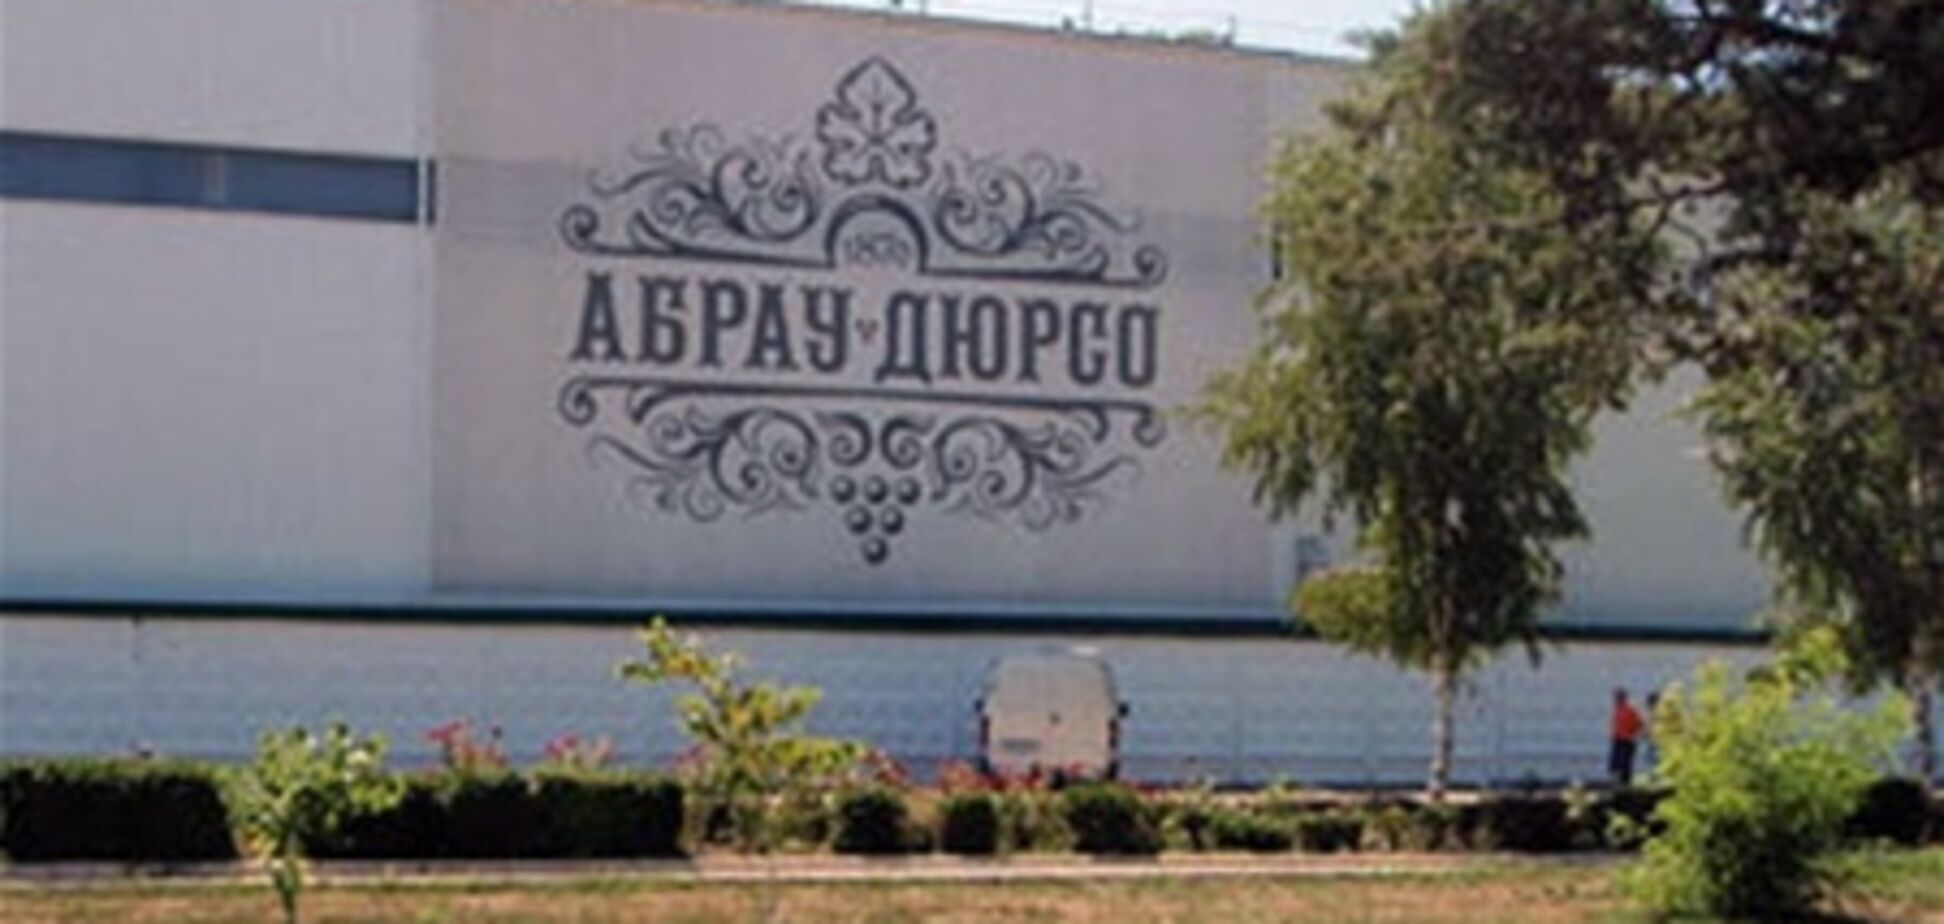 Владелец 'Абрау-Дюрсо' купил виноградники 'дворца Путина'